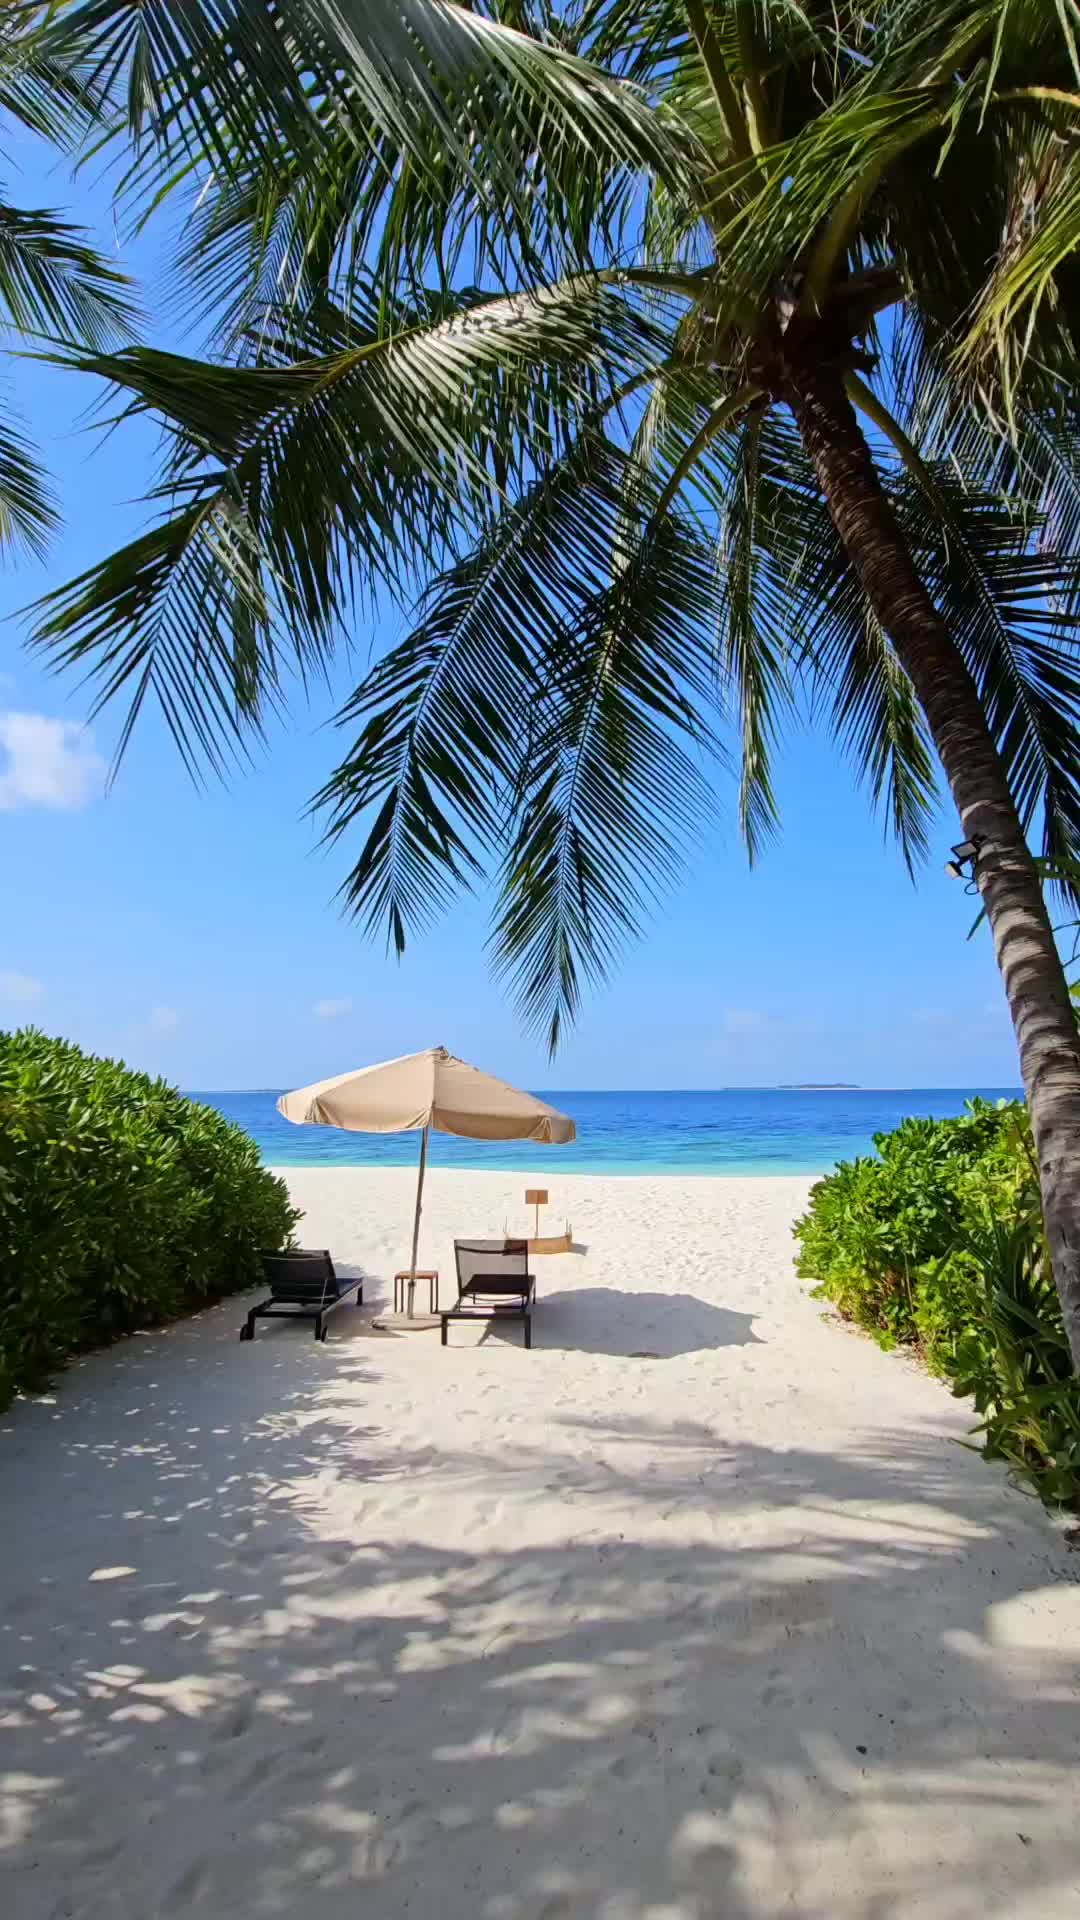 Private Beach Pool Villa in Maldives - Stunning Views